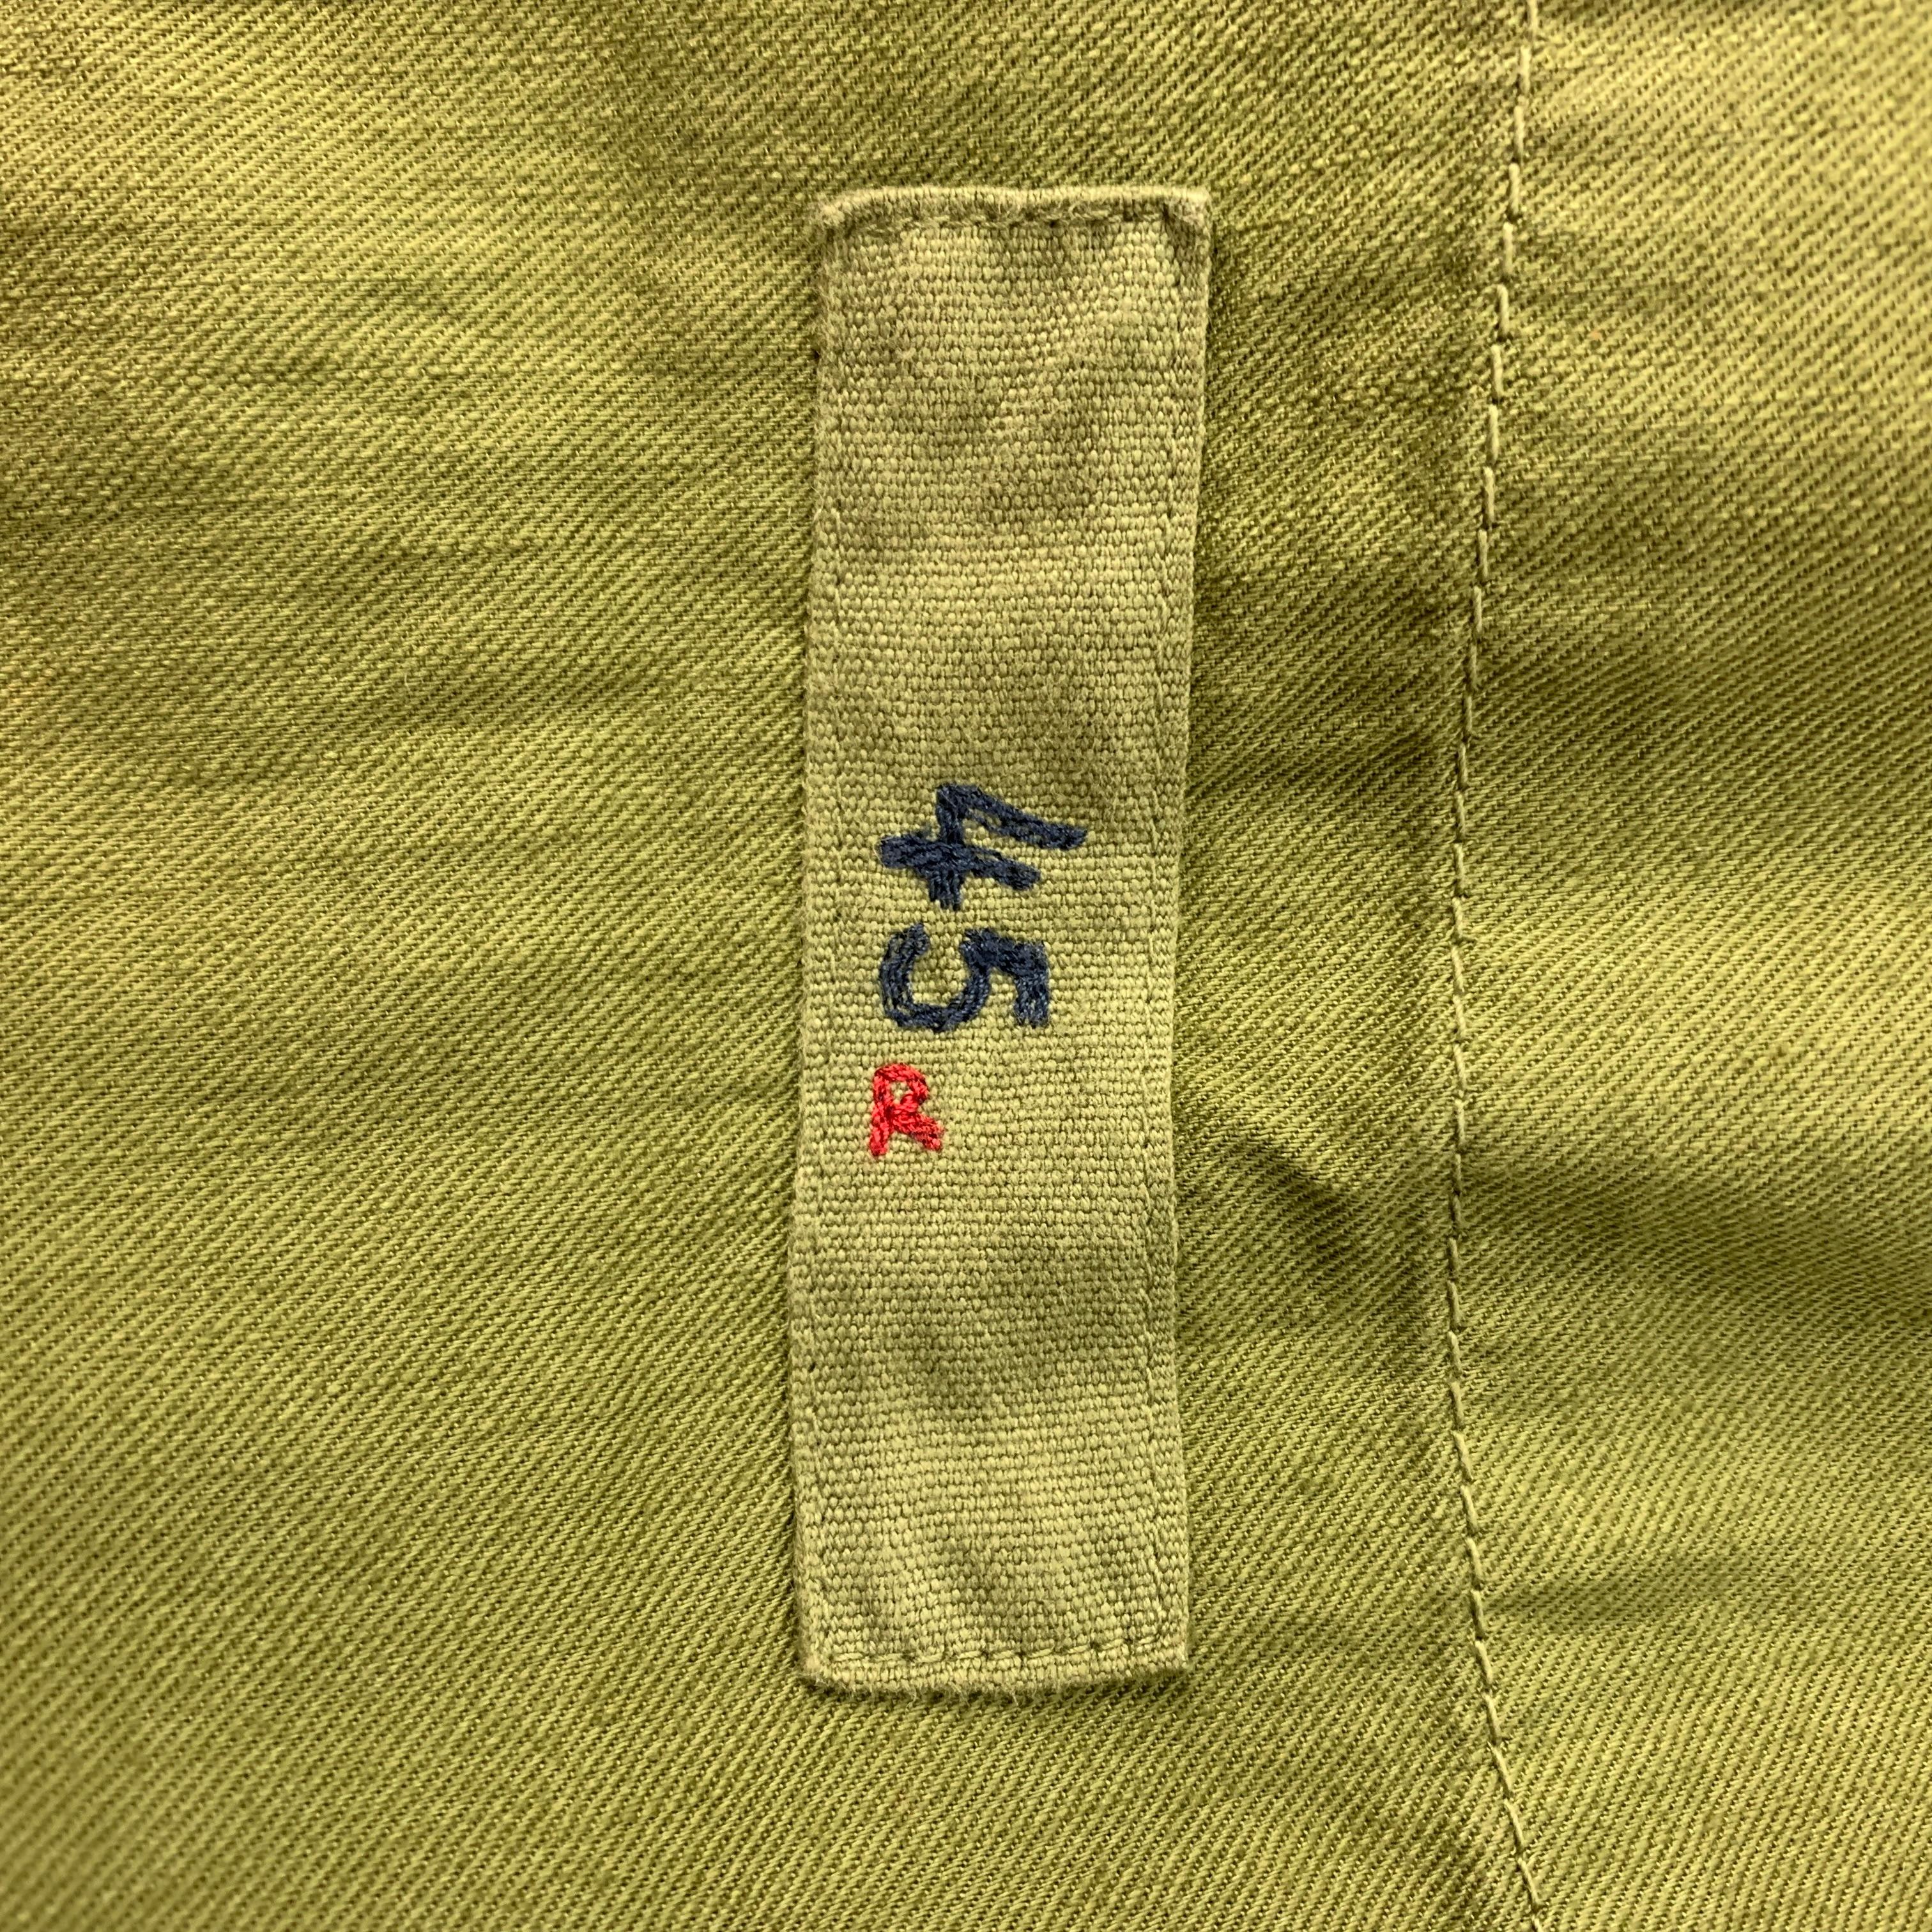 45rpm Size XL Olive Cotton Patch Pockets Marine Jacket 3